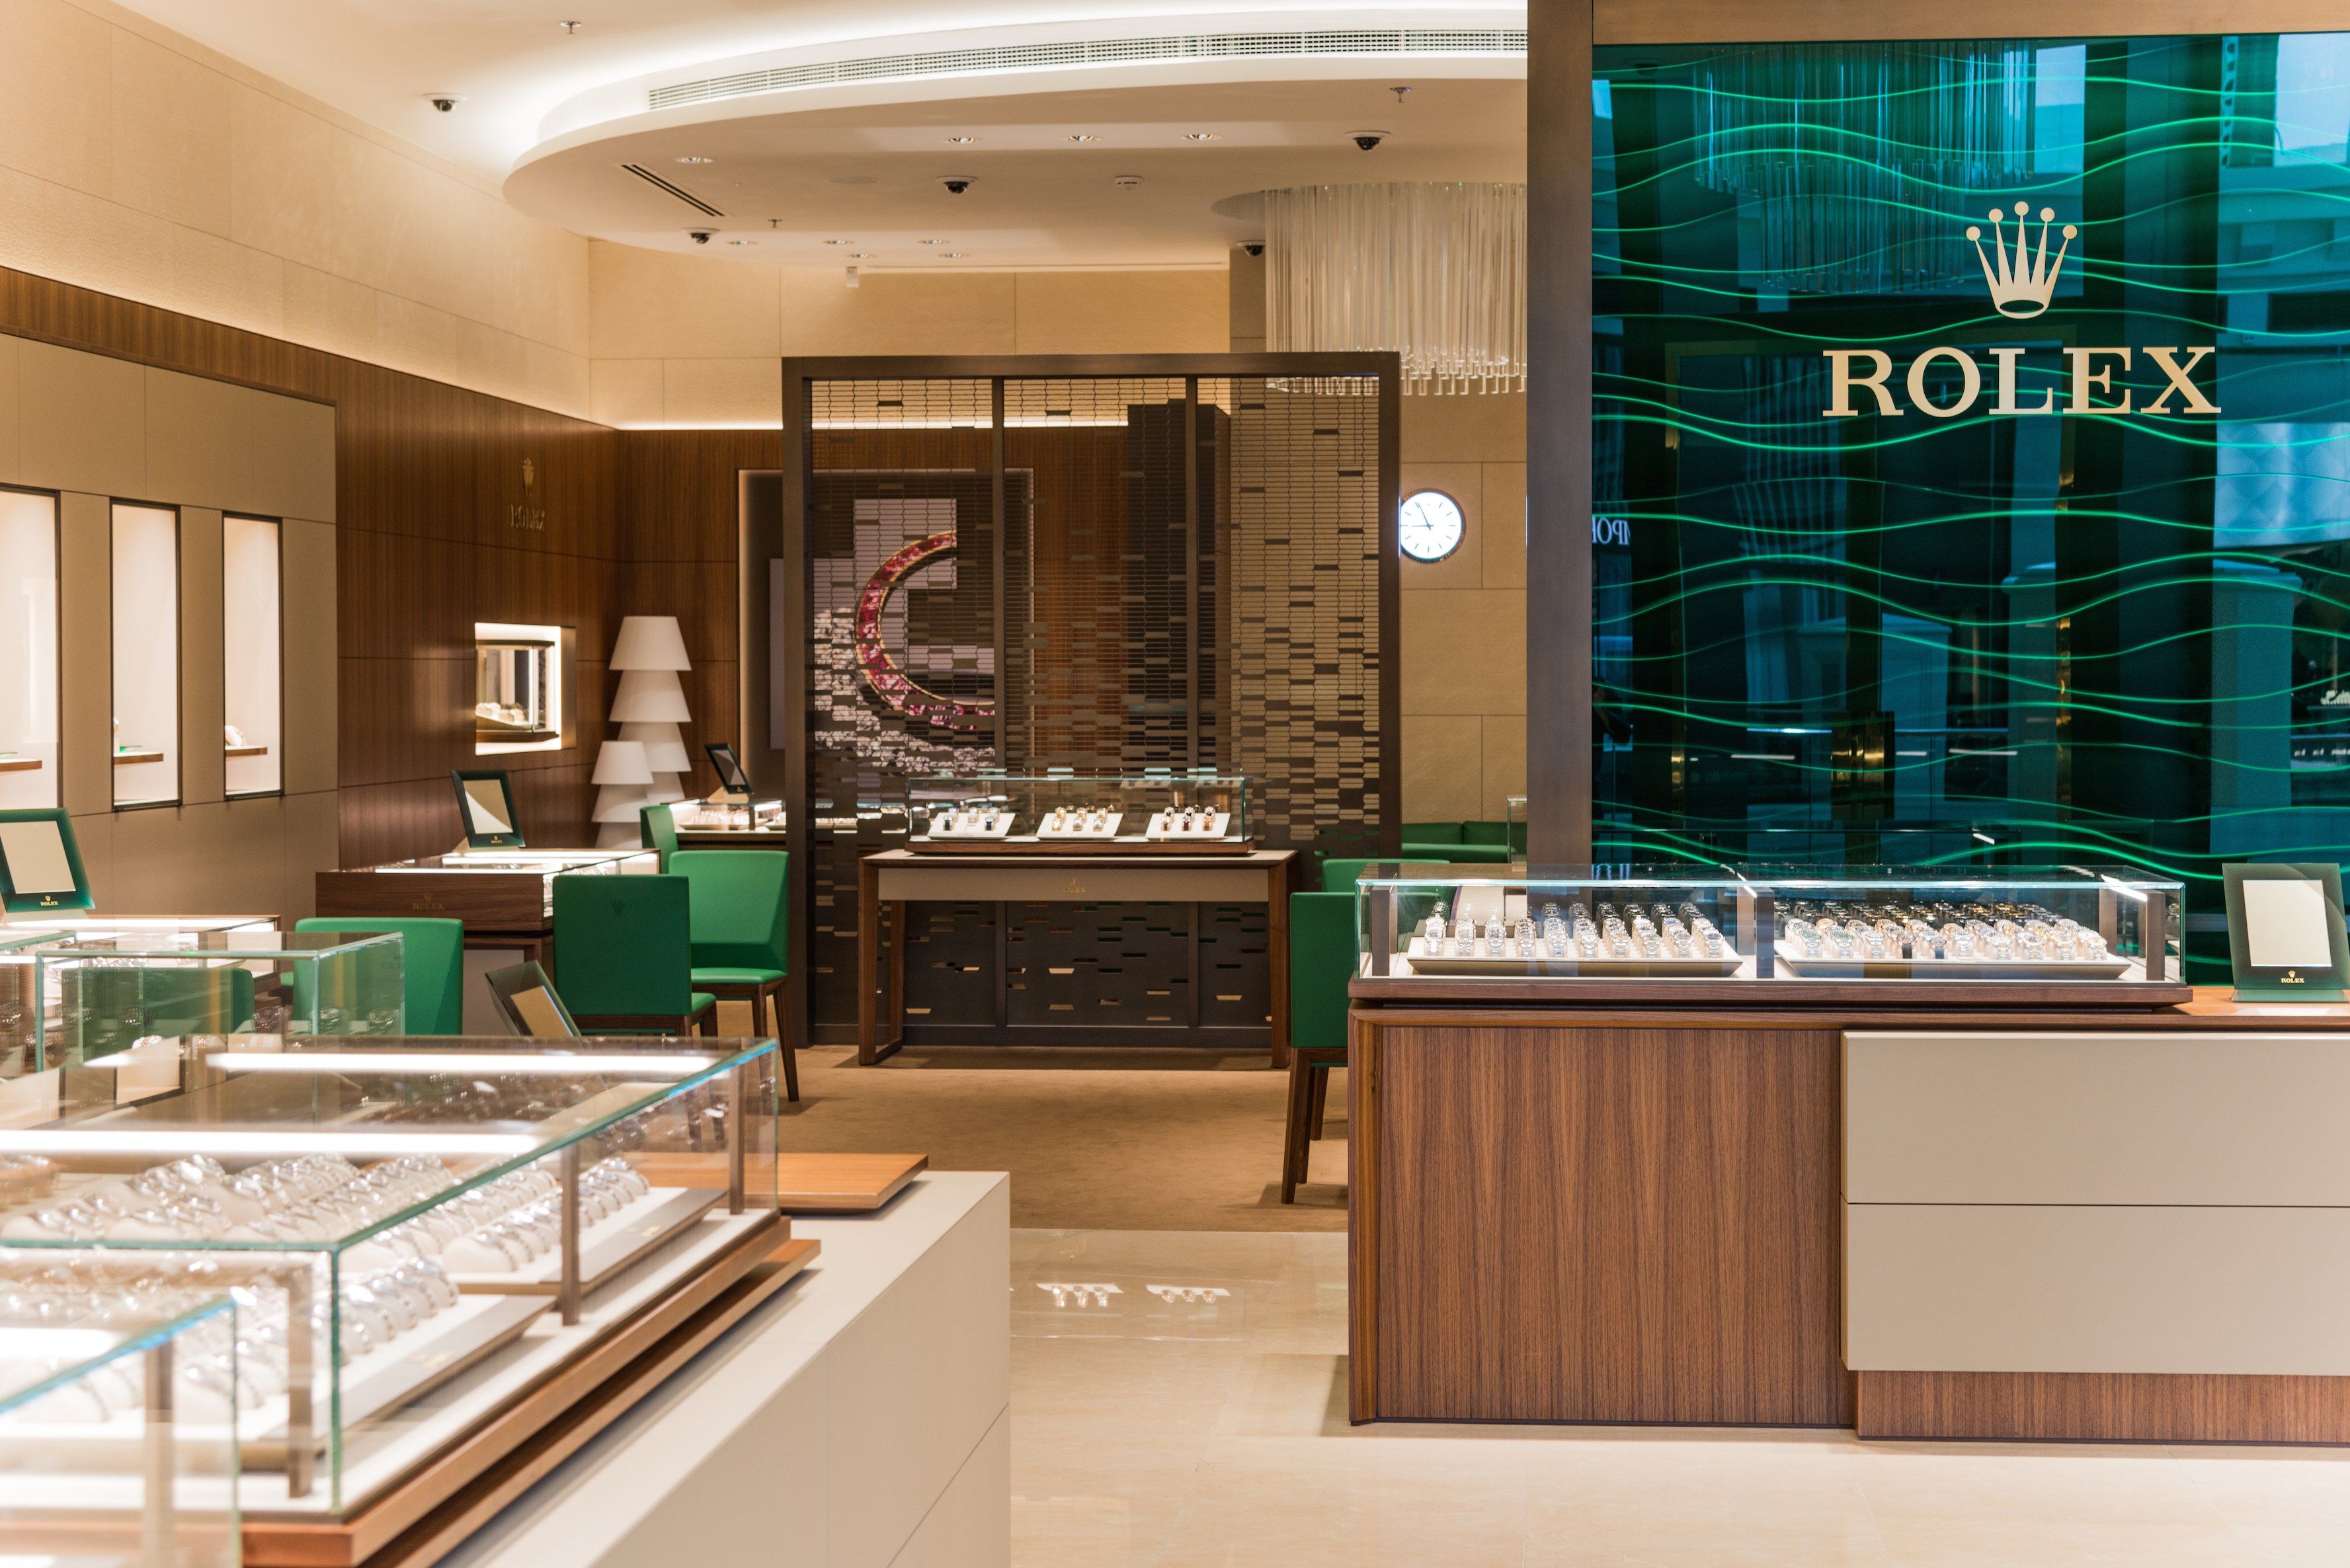 ROLEX | Dubai Shopping Guide